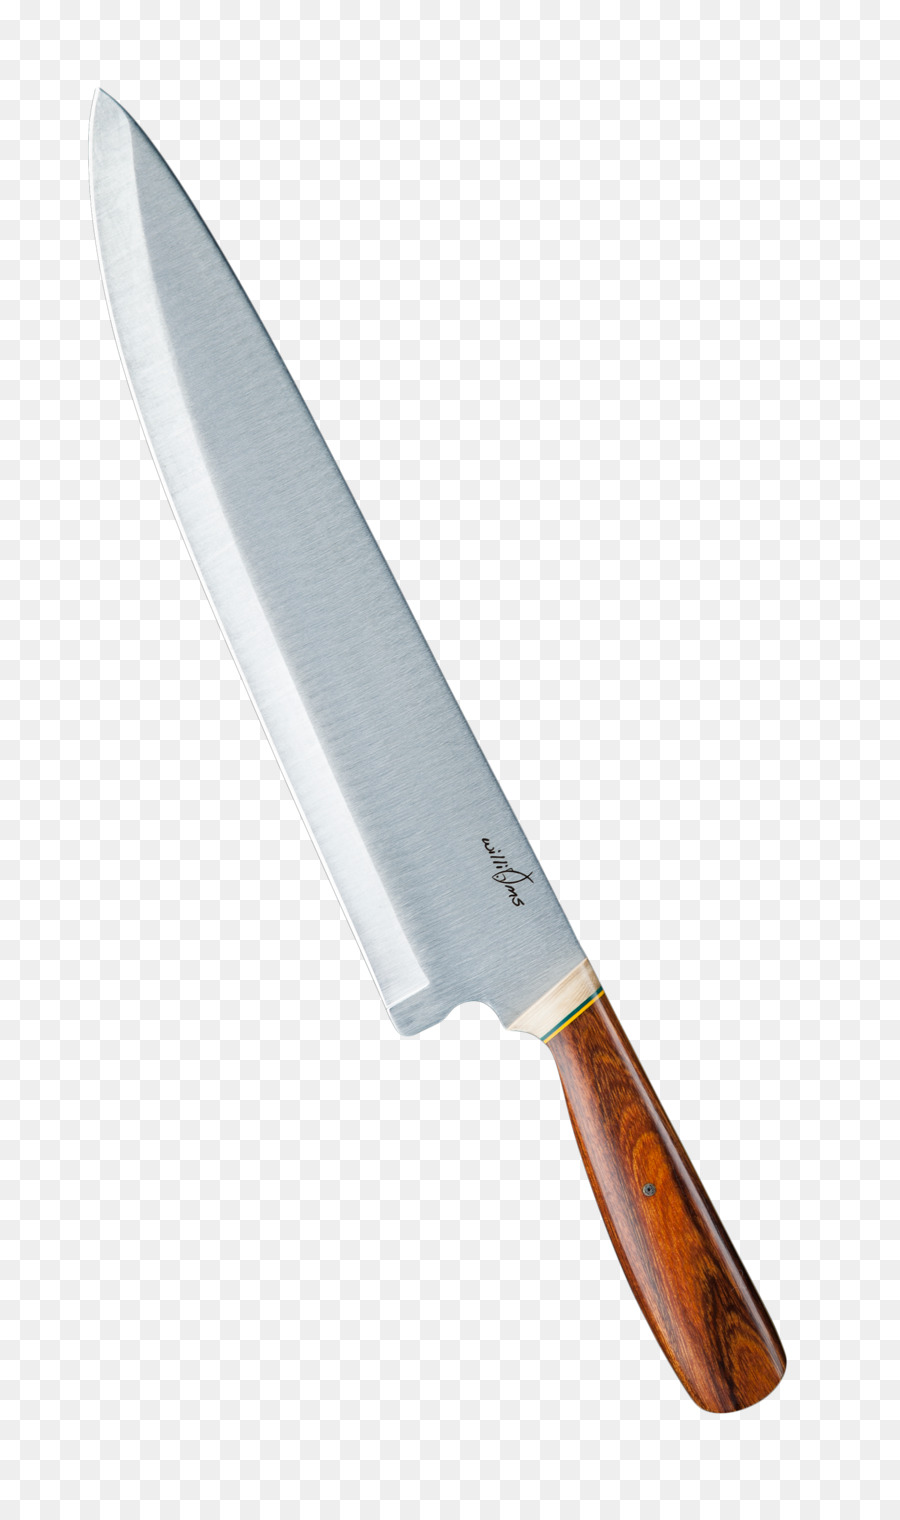 Knife Kitchen Knives Tool Kitchen utensil Utility Knives - knives png download - 1500*2526 - Free Transparent Knife png Download.